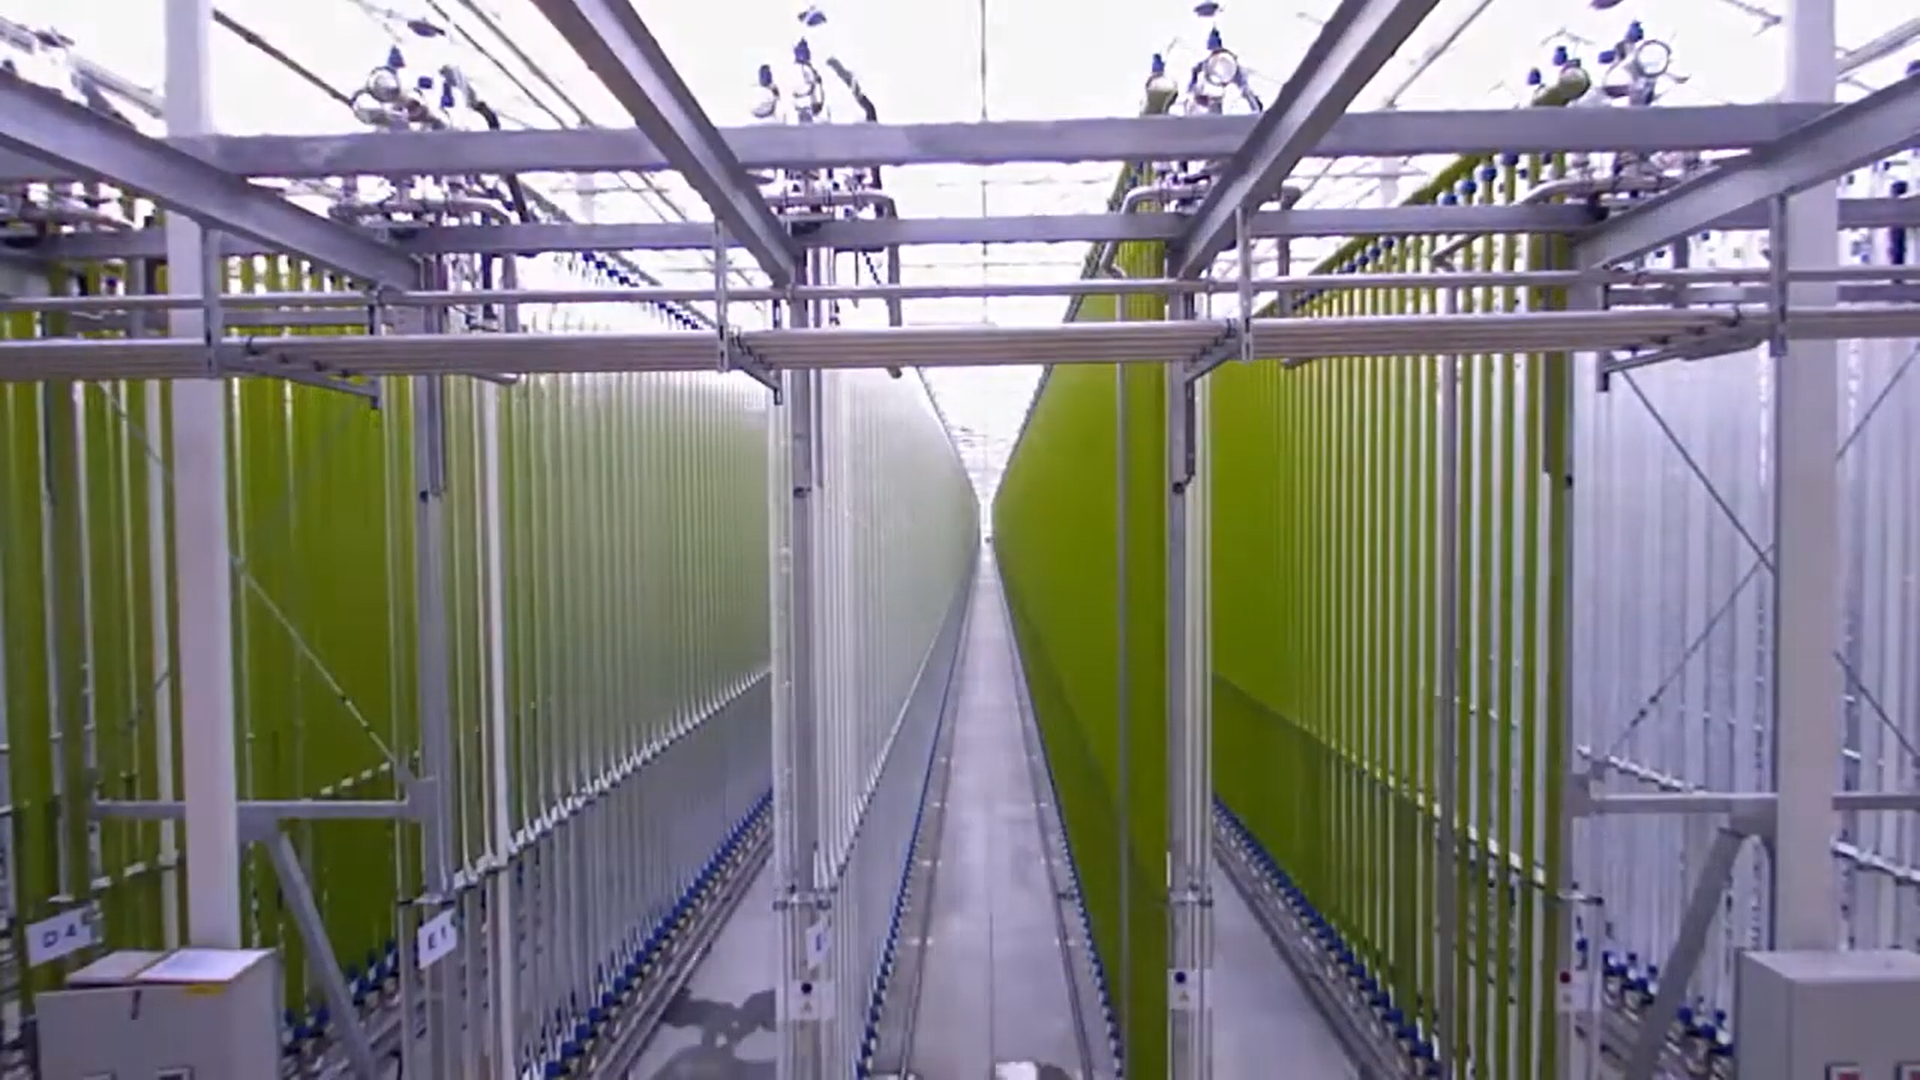 Jongerius ecoduna의 미세조류 재배 공장 건설 타임랩스 영상 보기